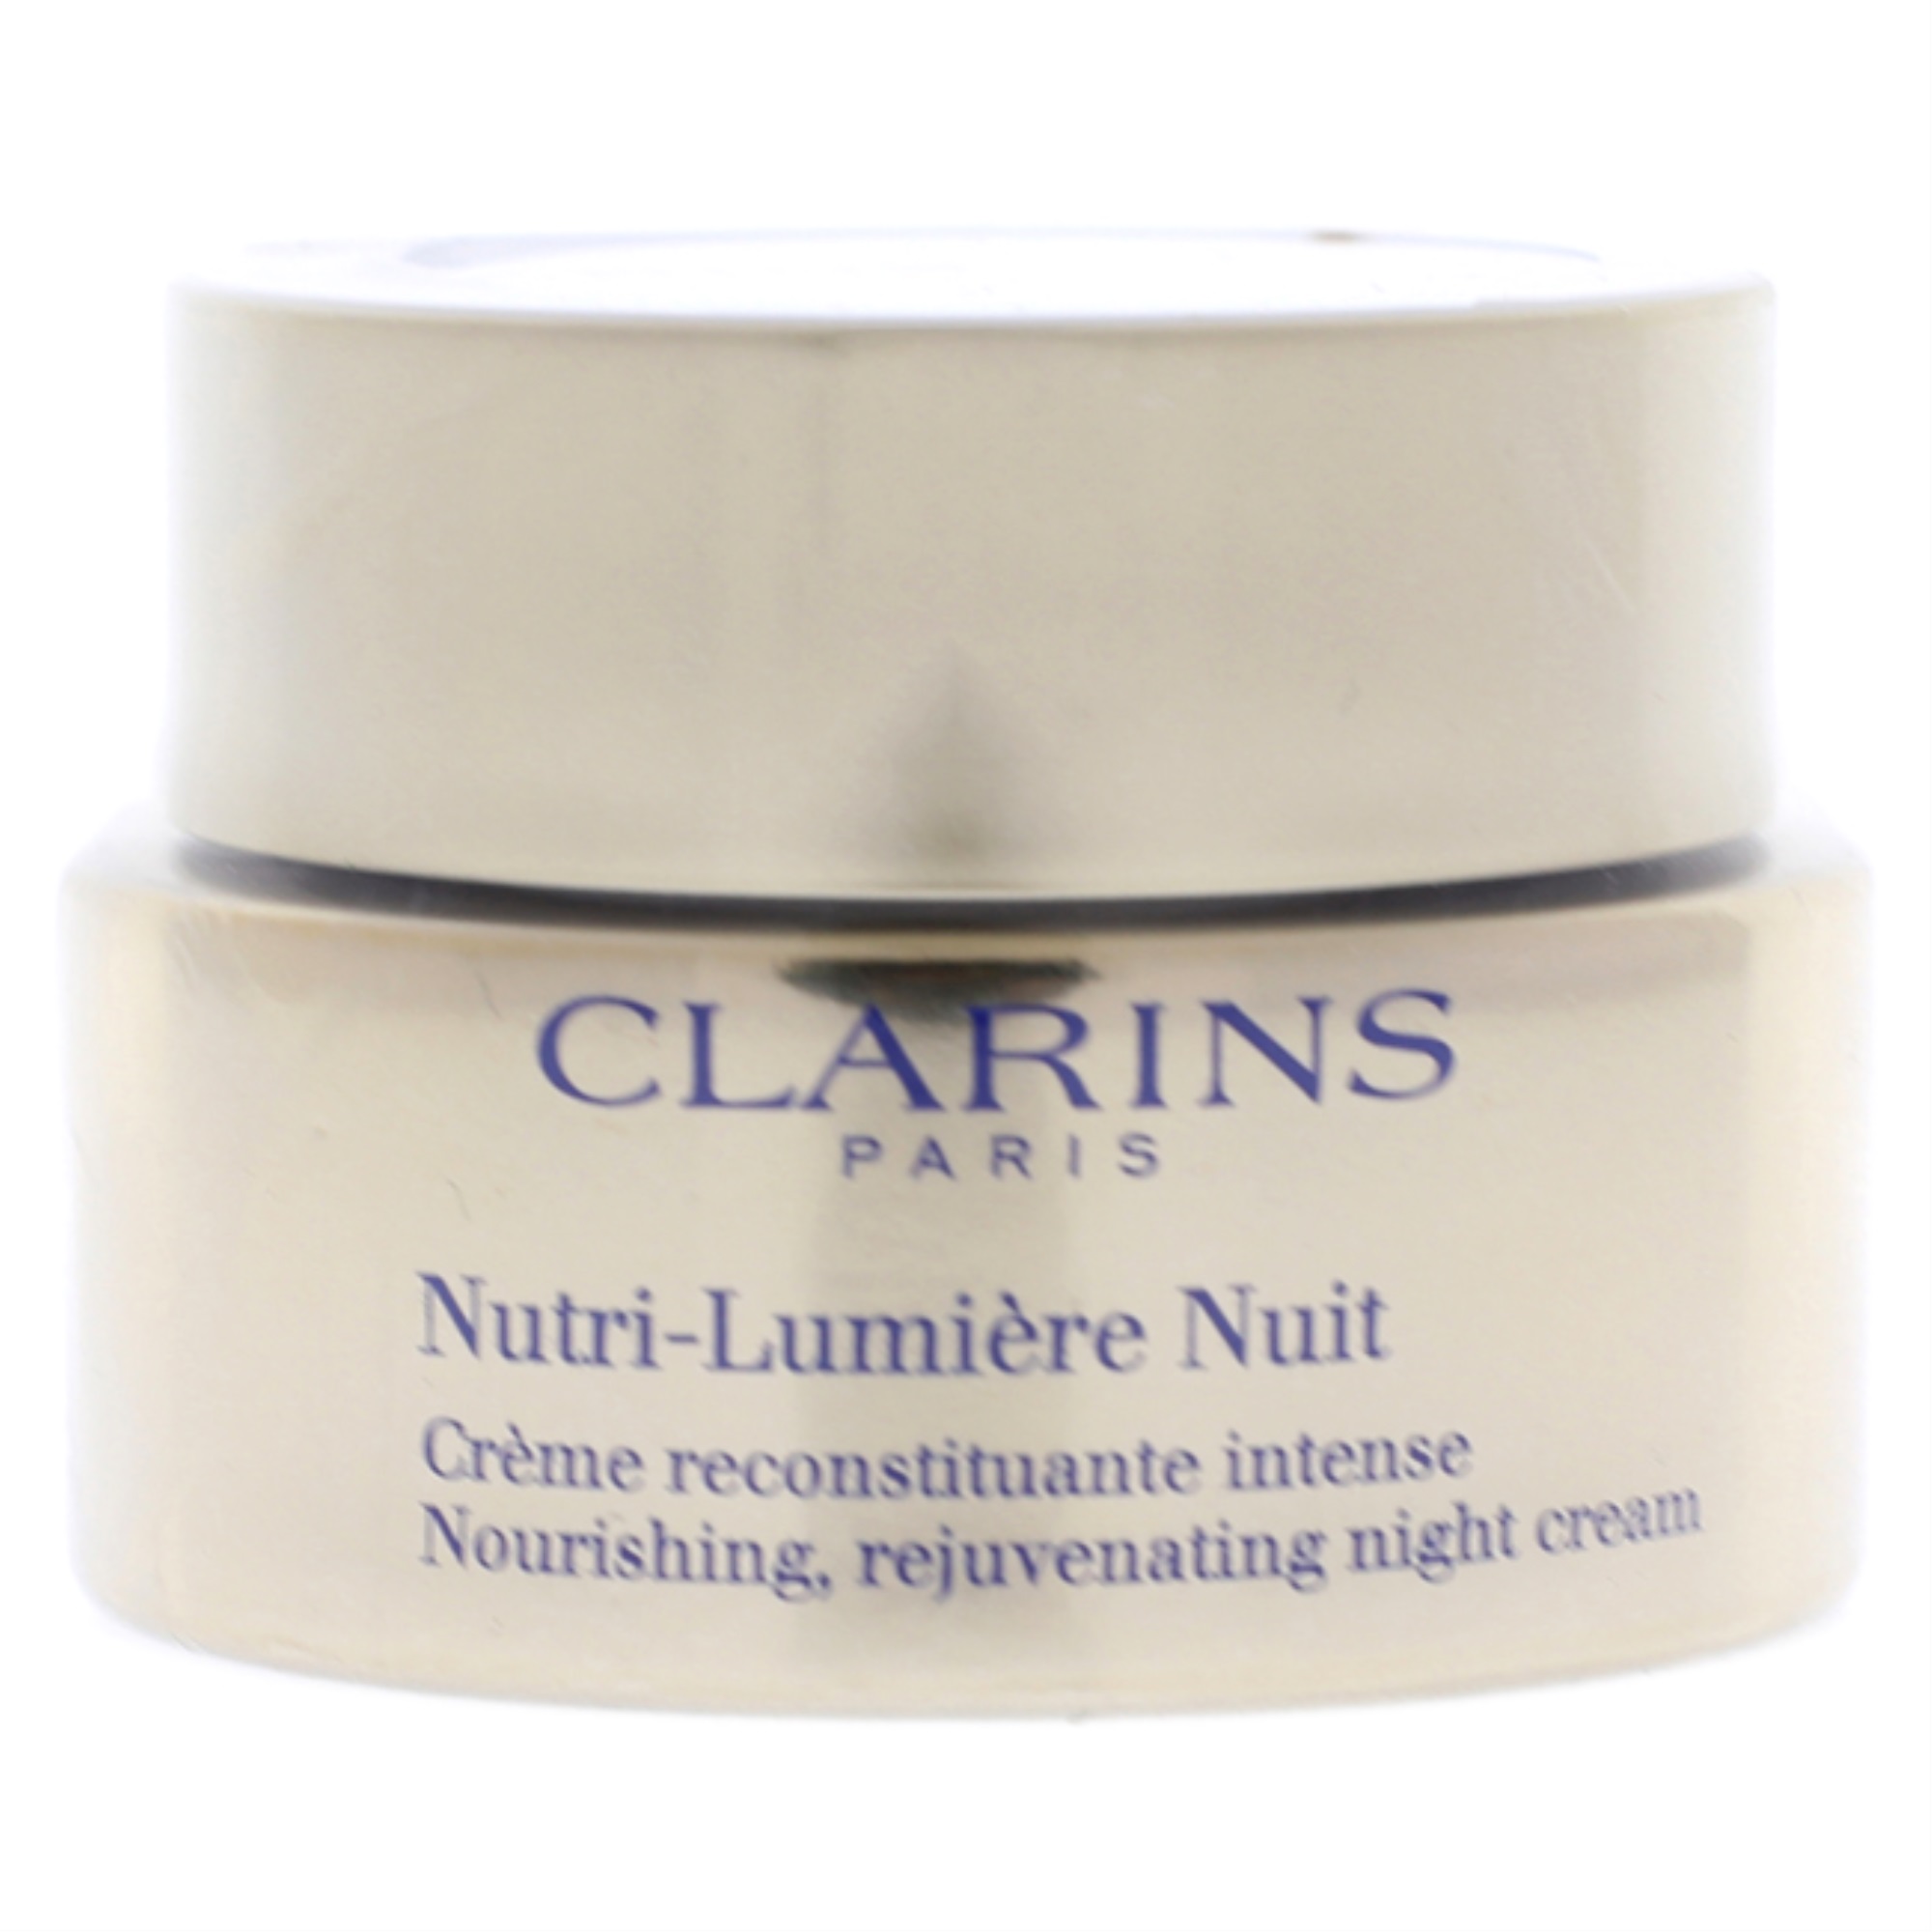 Clarins Nutri-Lumiere Night Cream by Clarins for Unisex - 1.6 oz Cream